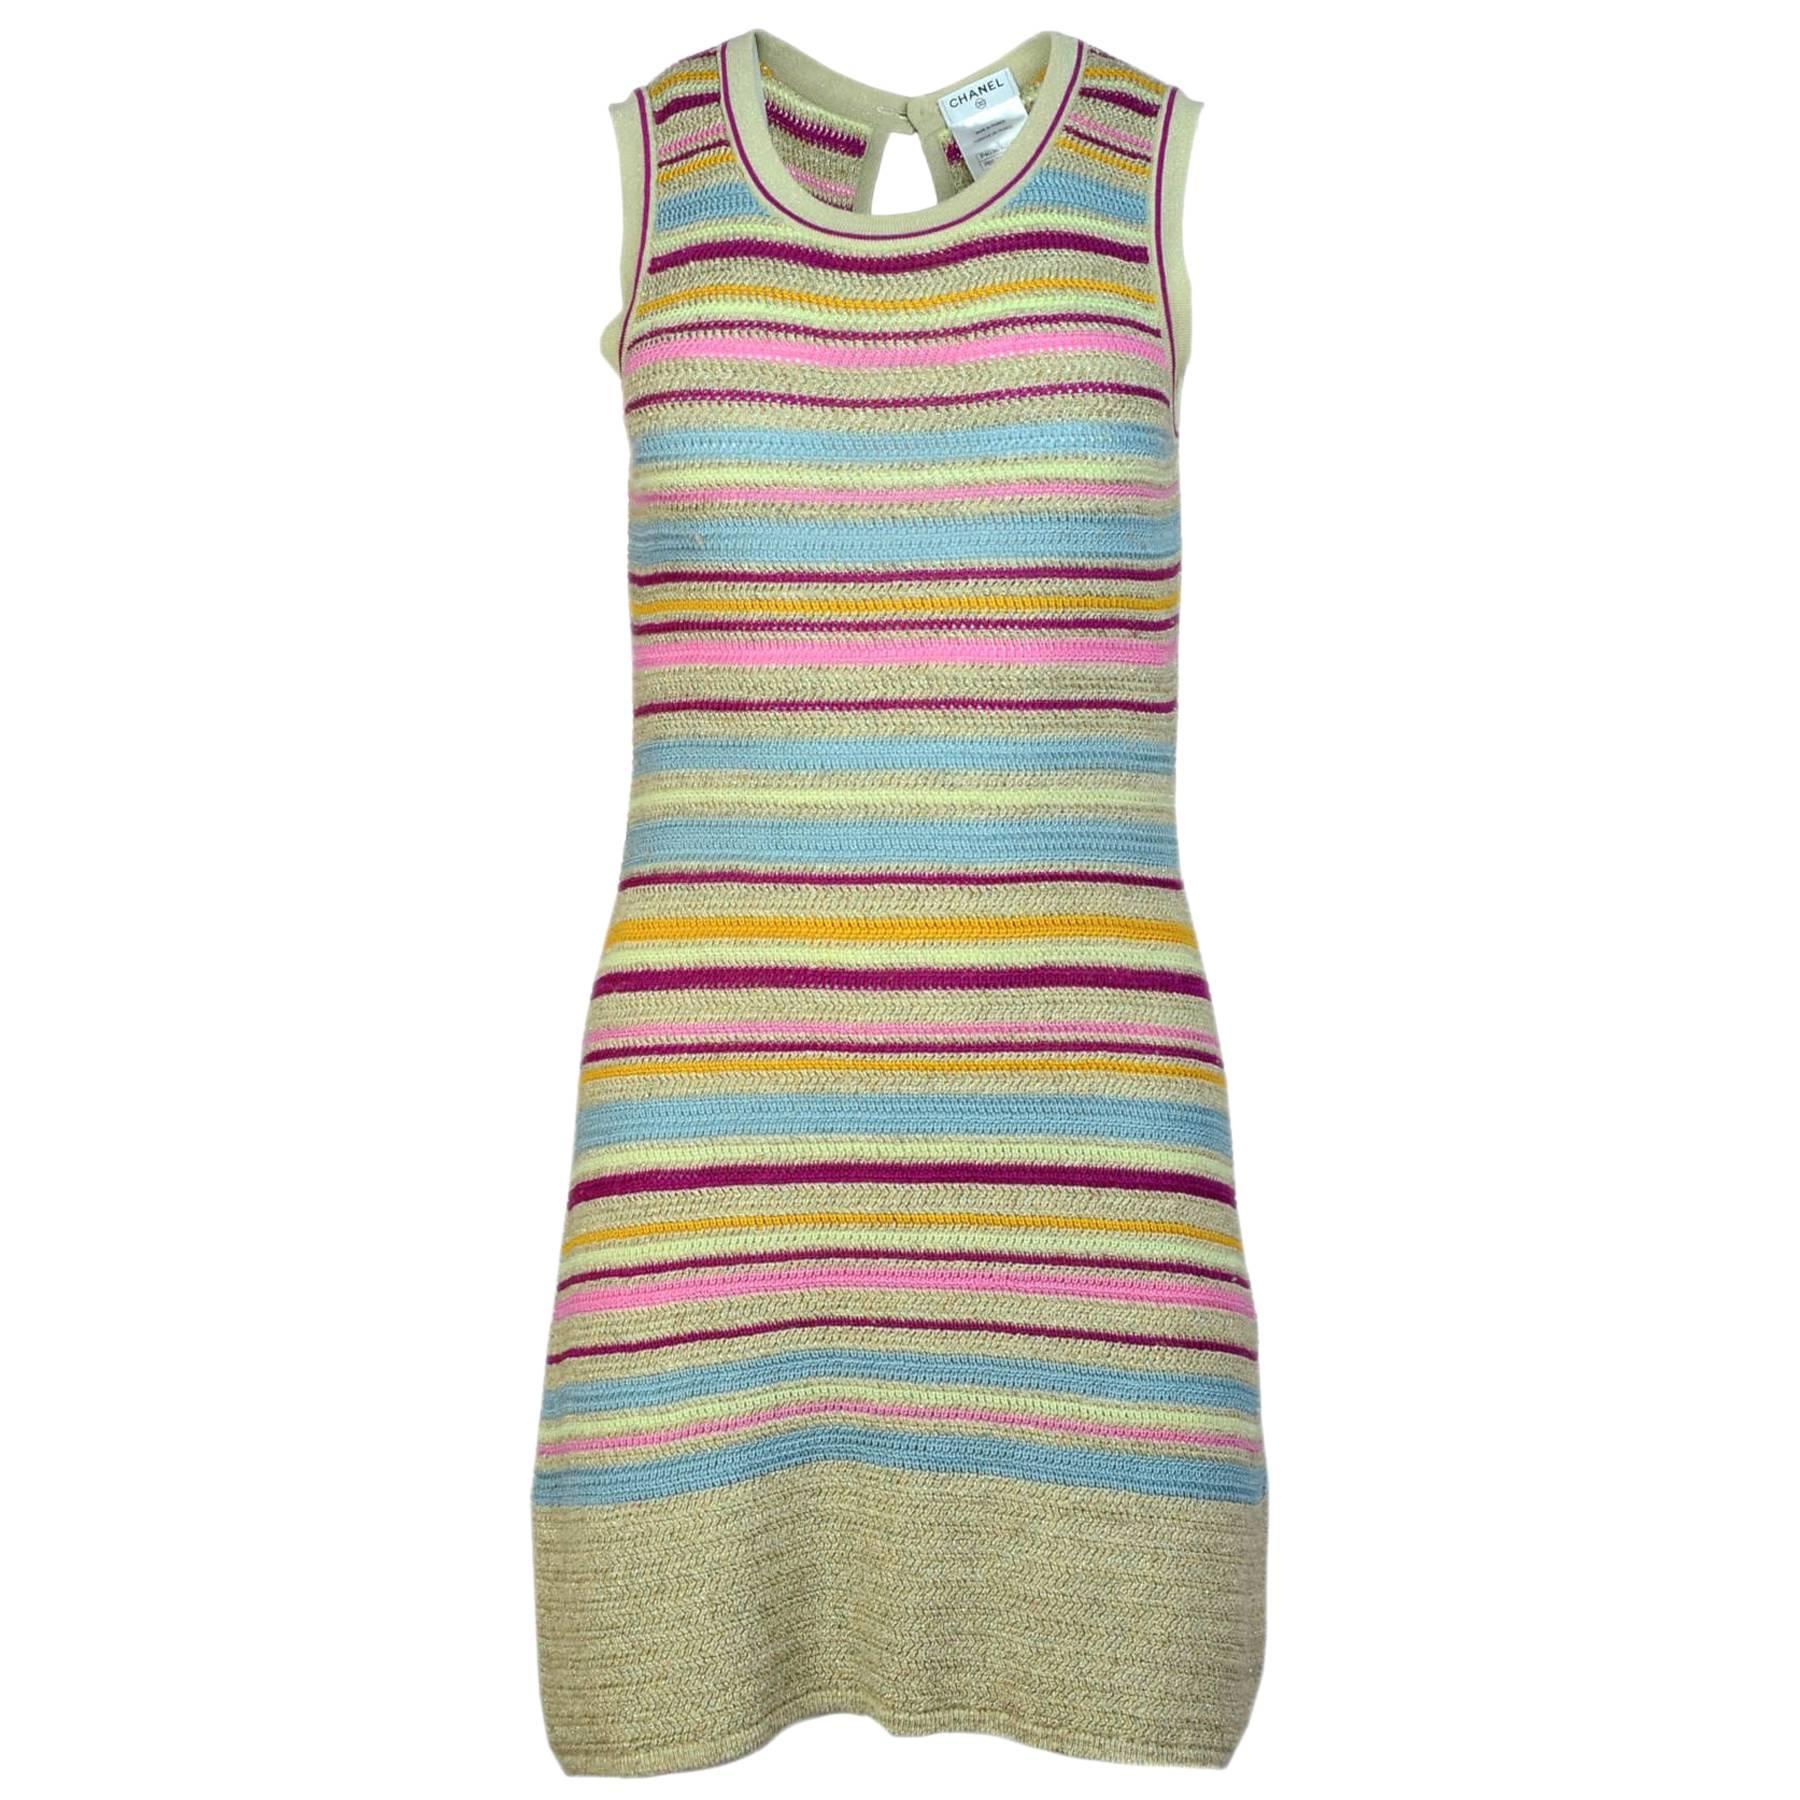 Chanel Tan & Multi-Colored Striped Knit Dress Sz FR36